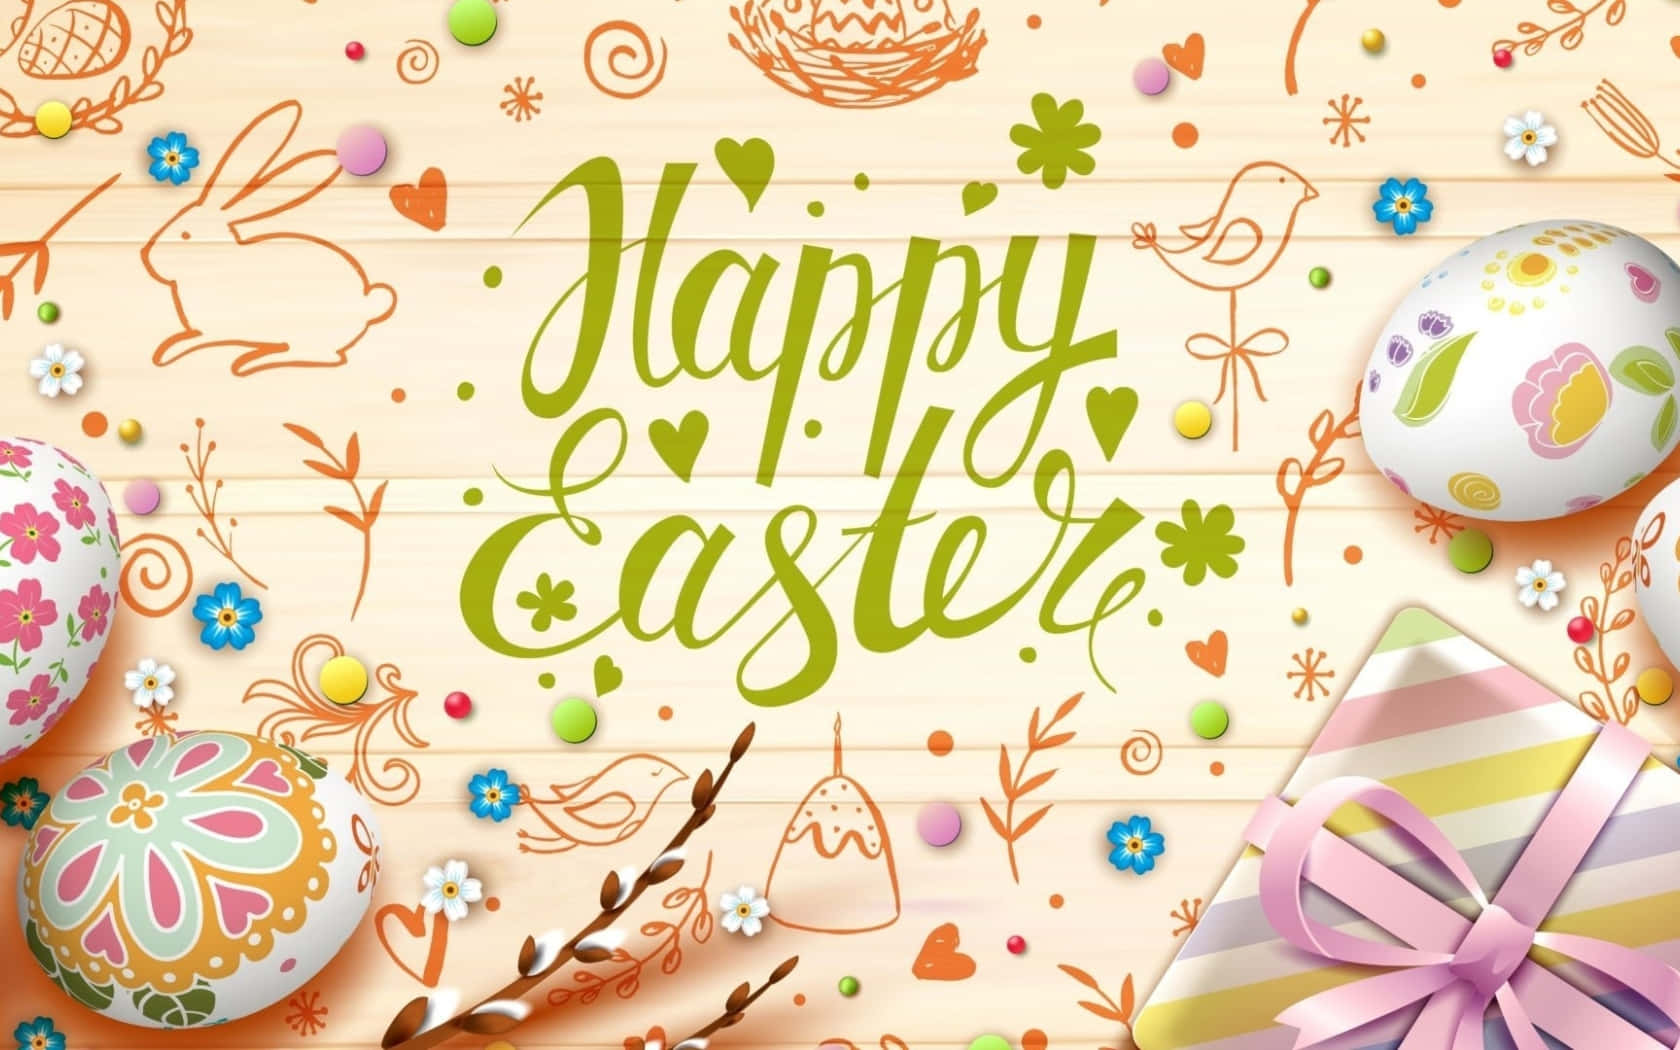 Free Cute Happy Easter Wallpaper Downloads, Cute Happy Easter Wallpaper for FREE